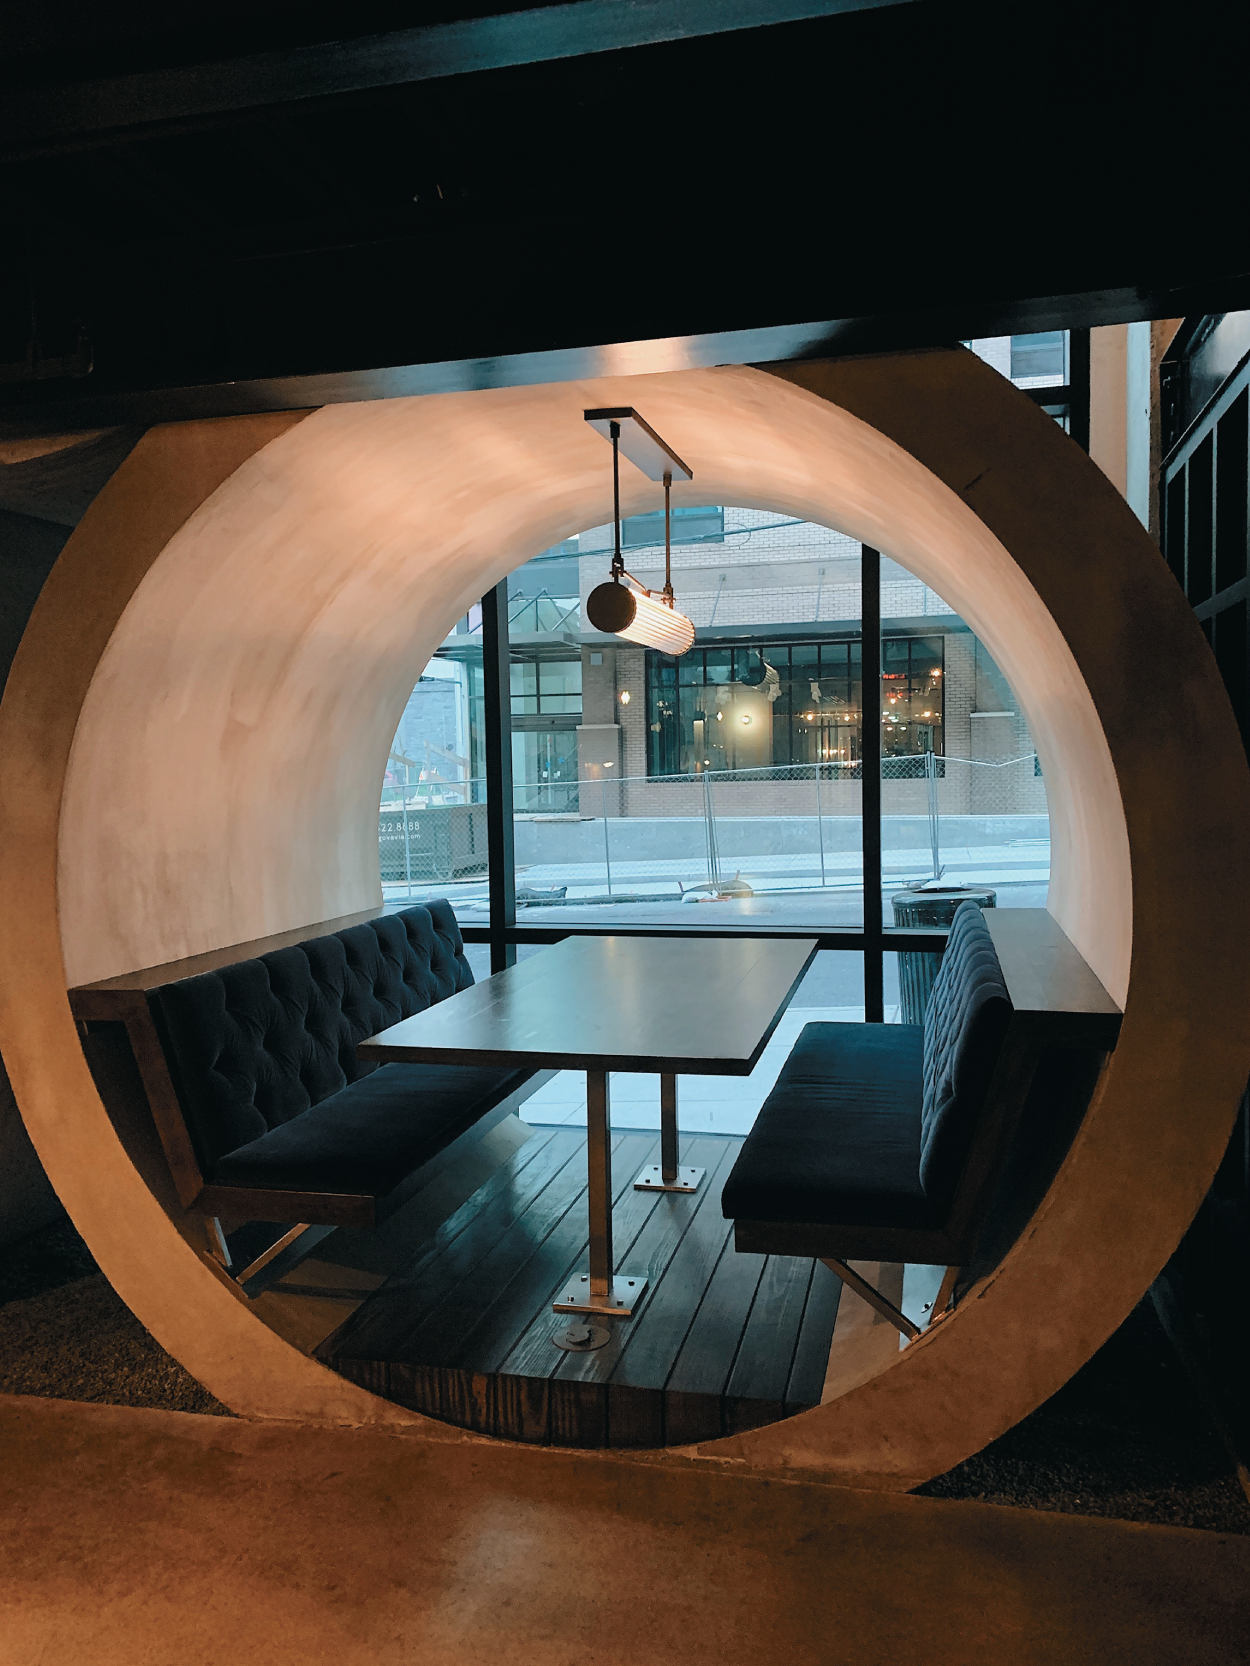 Photo depicts a view into a restaurant space Jon Tyson / Unsplash.com